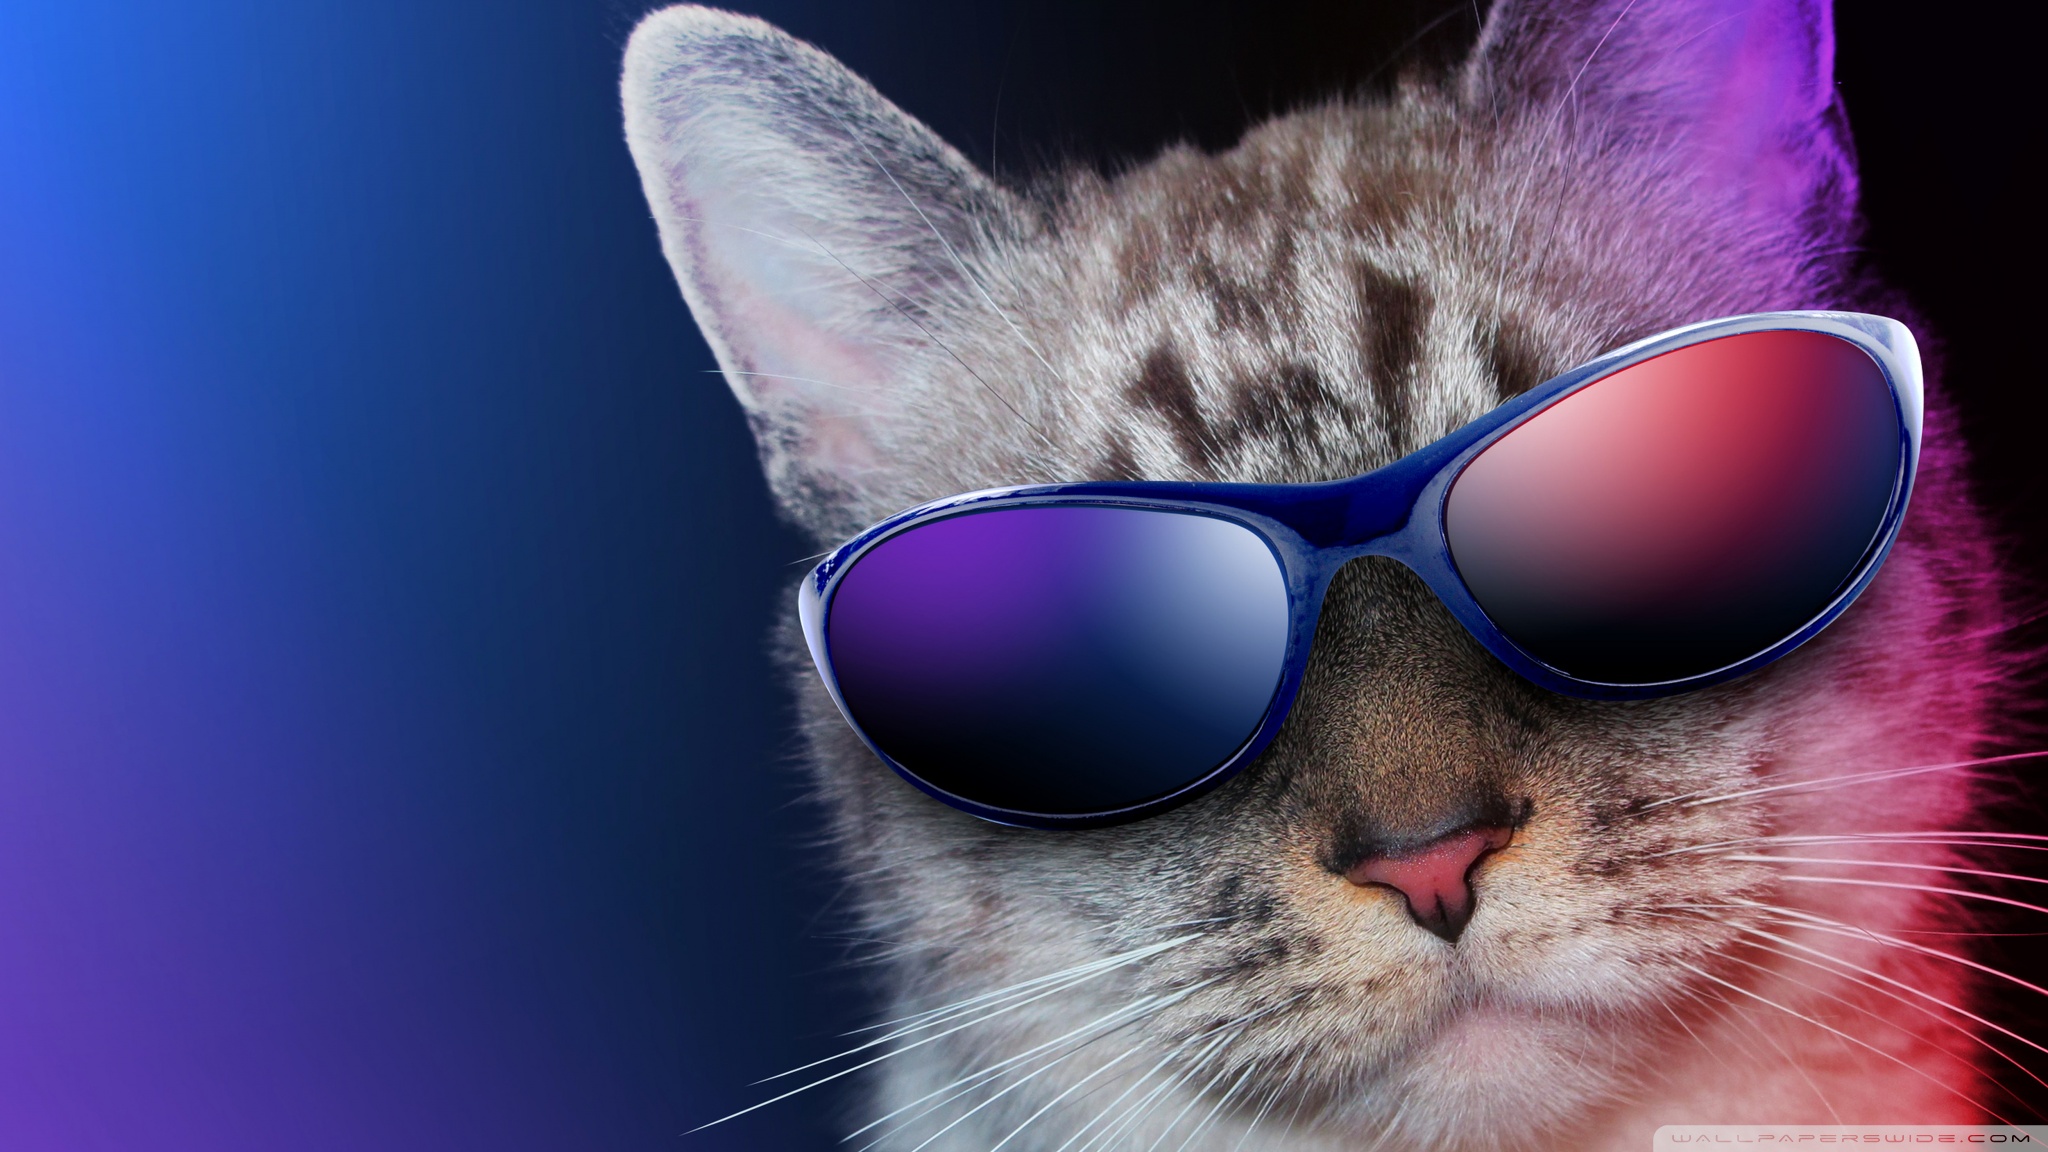 Cool Cat Ultra Hd Desktop Background Wallpaper For 4k Uhd Tv